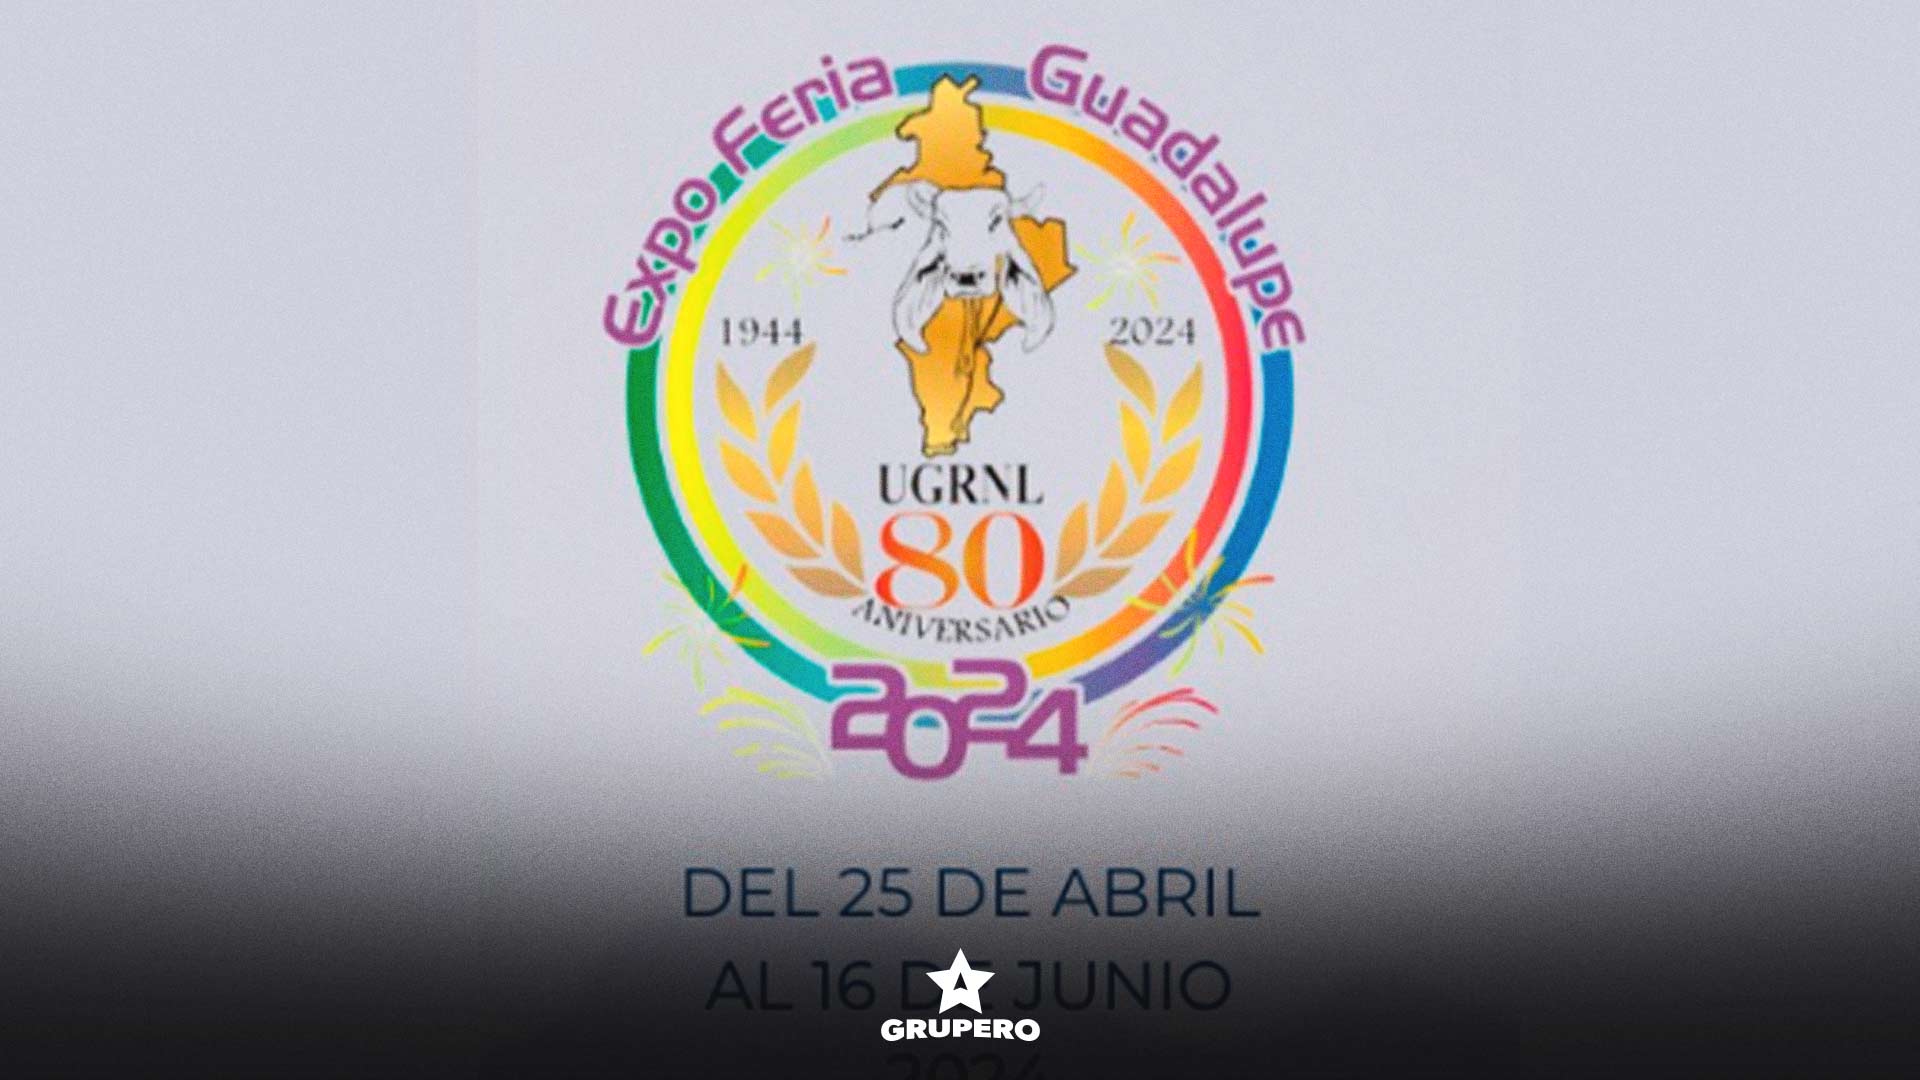 Expo Feria Guadalupe Nuevo León 2024